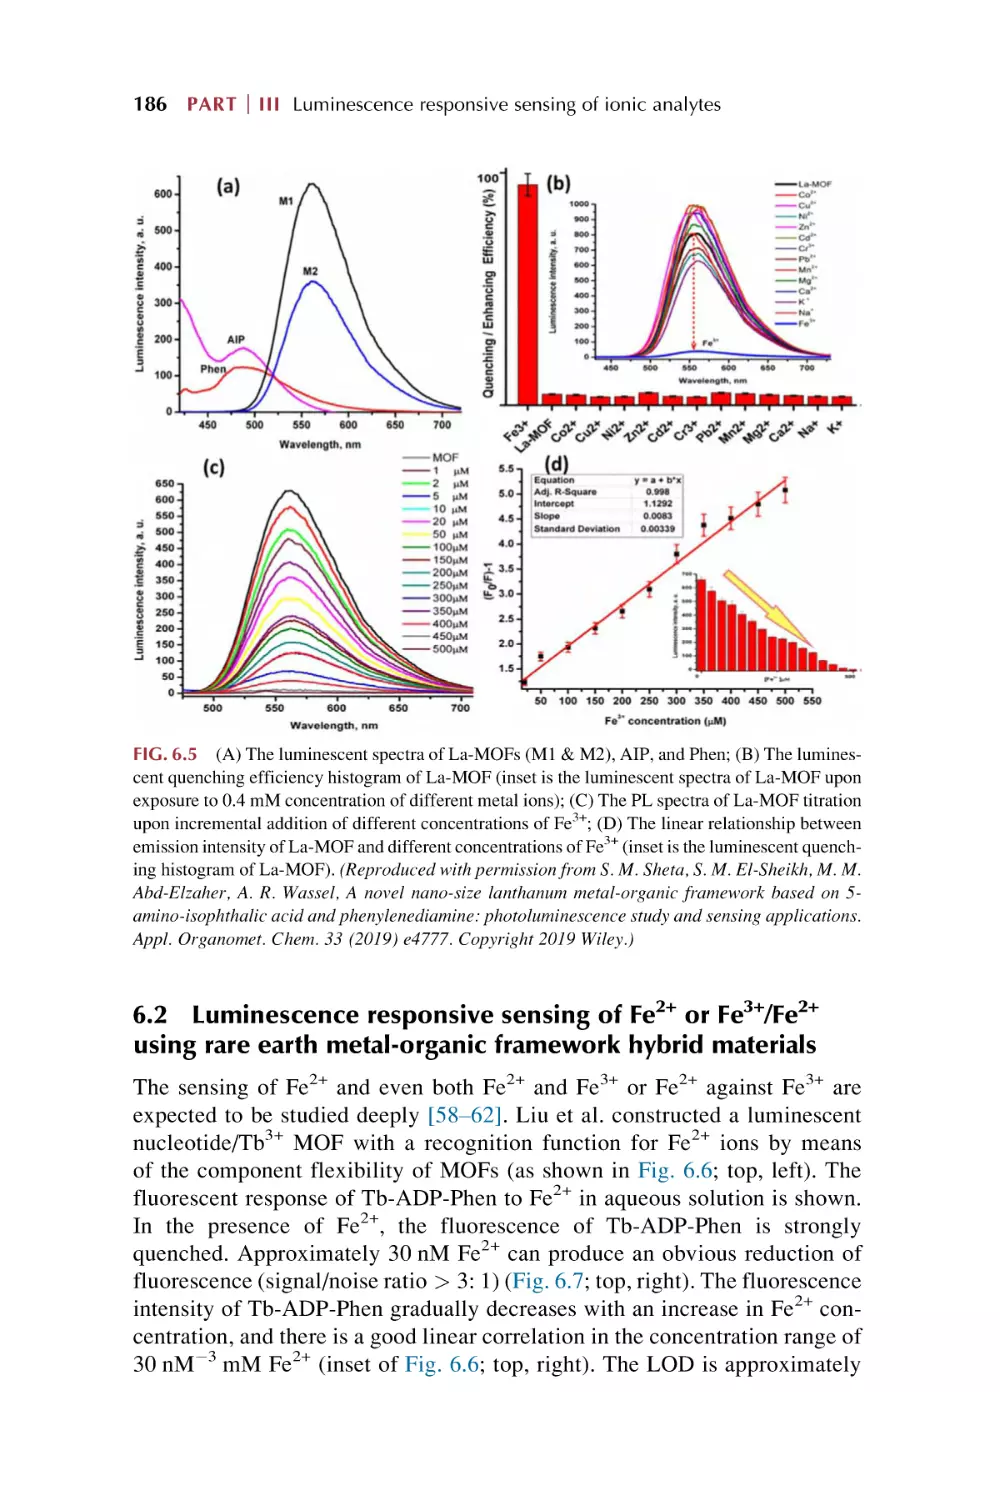 6.2. Luminescence responsive sensing of Fe2+ or Fe3+/Fe2+ using rare earth metal-organic framework hybrid materials